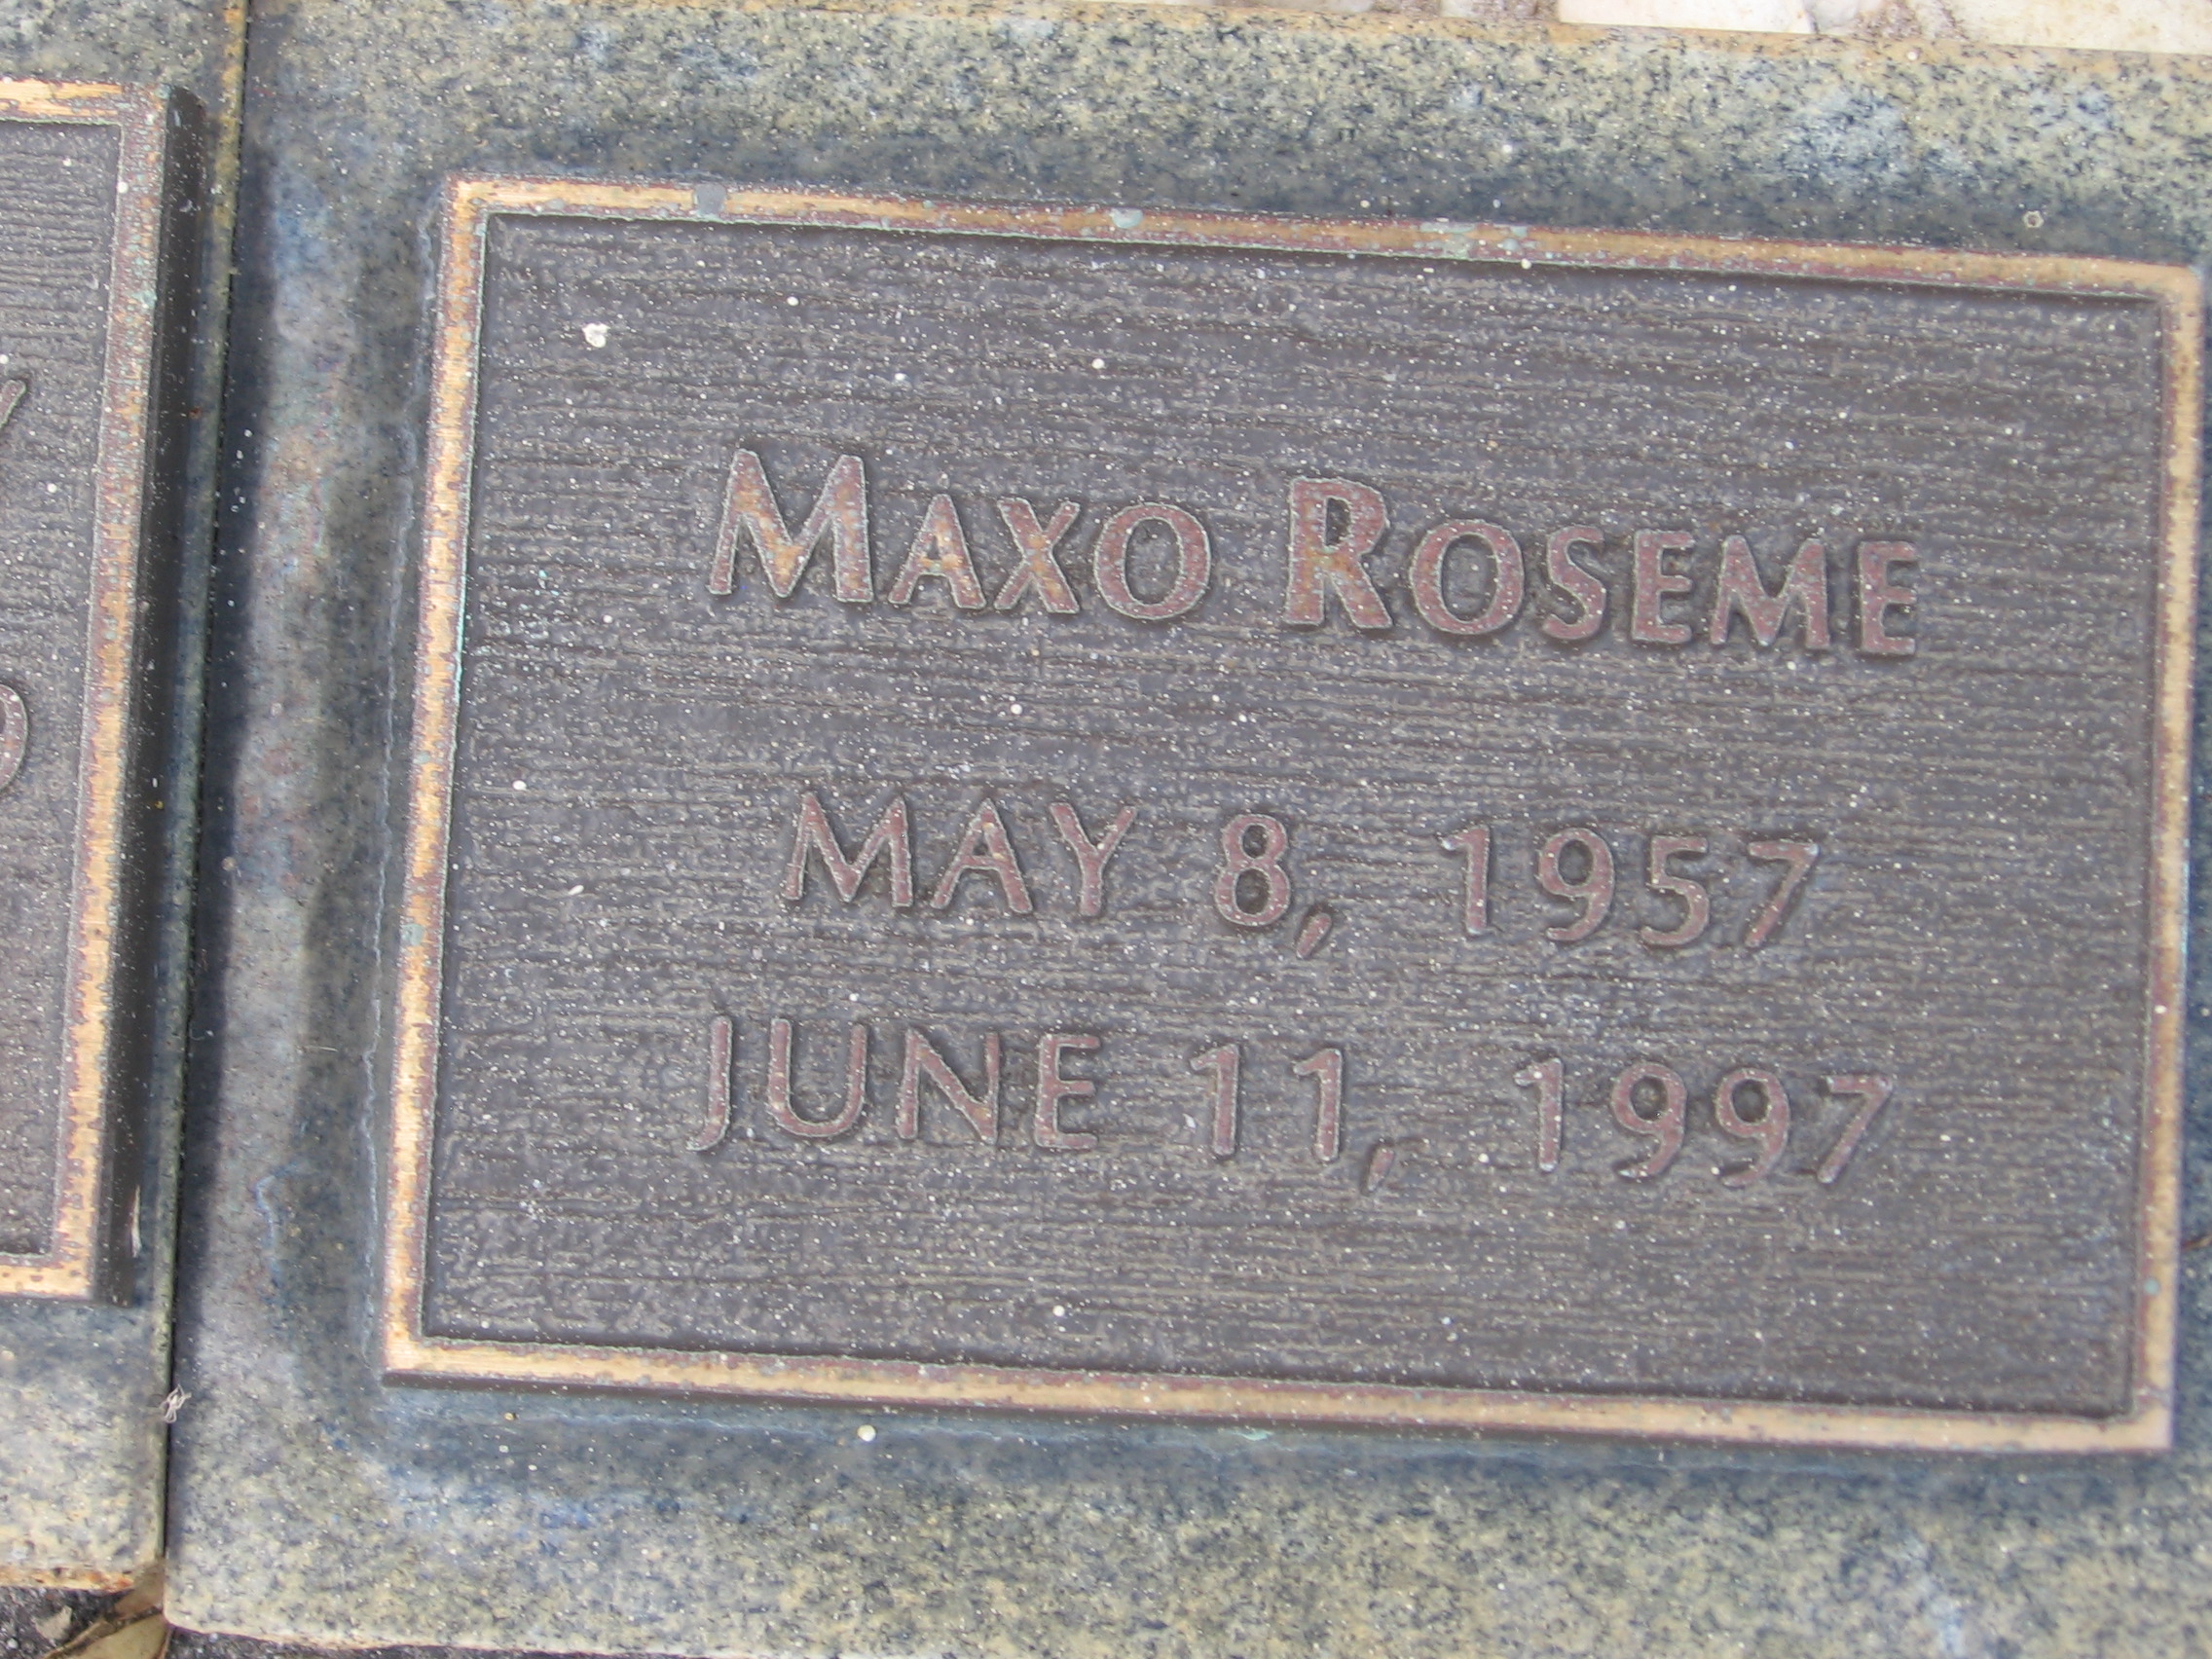 Maxo Roseme